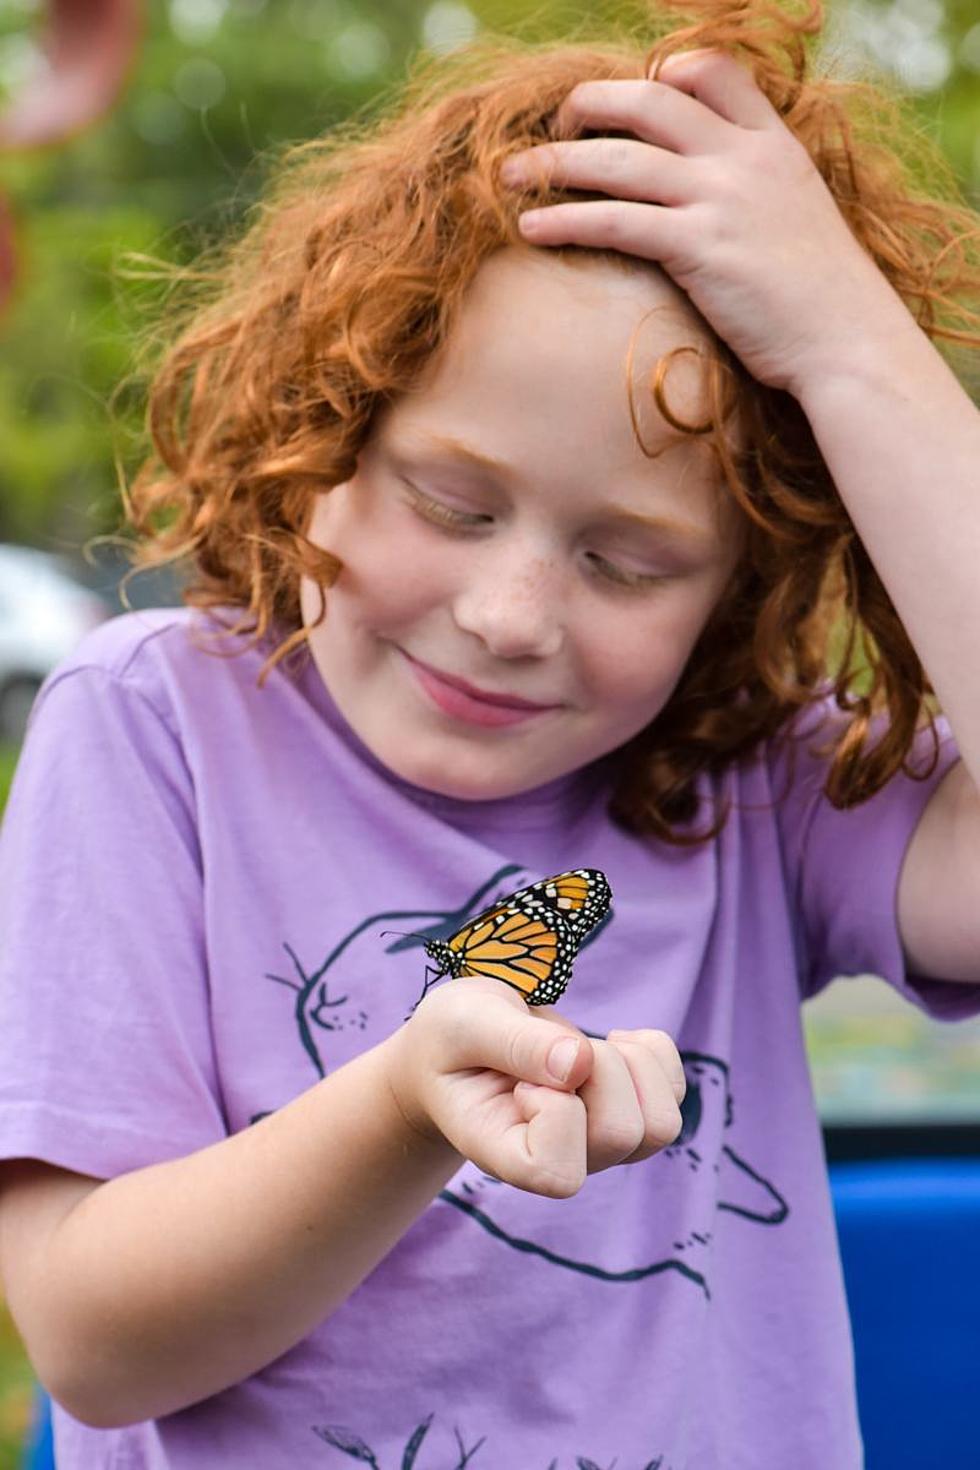 Photos: Monarchs rule in Crane Park